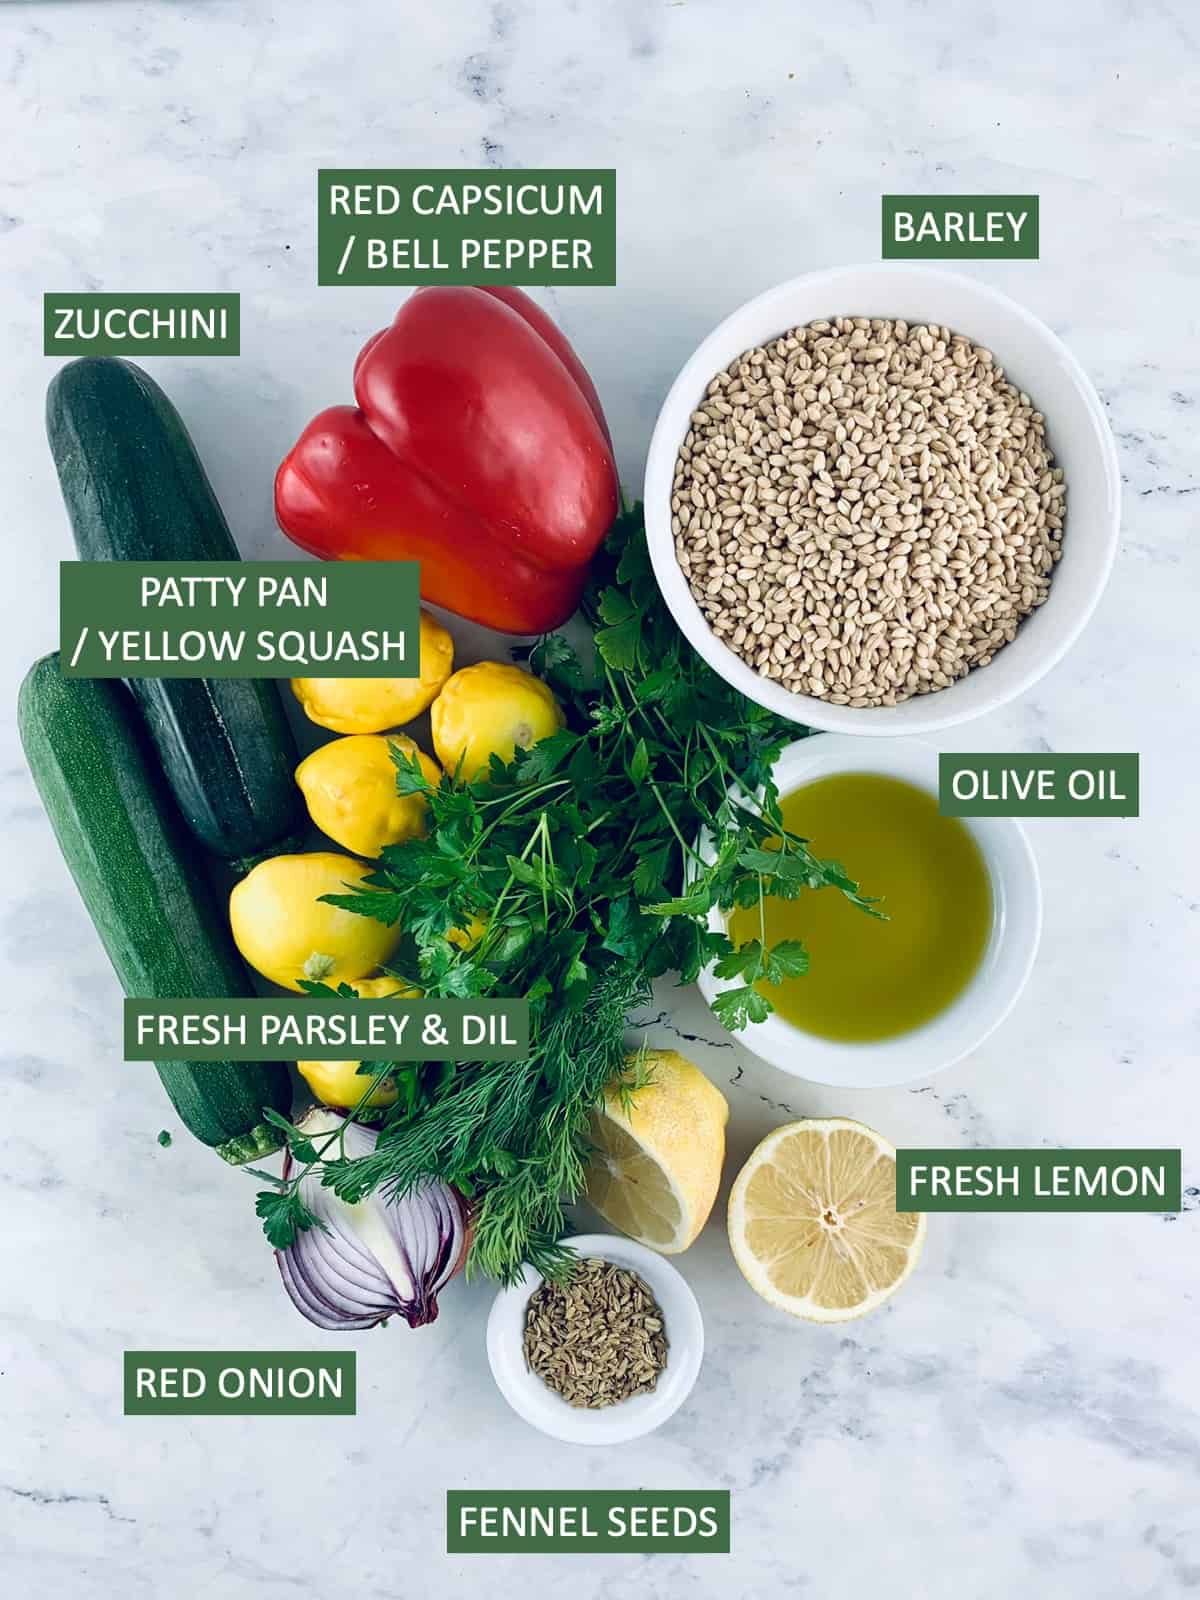 Labelled ingredients needed to make barley salad.